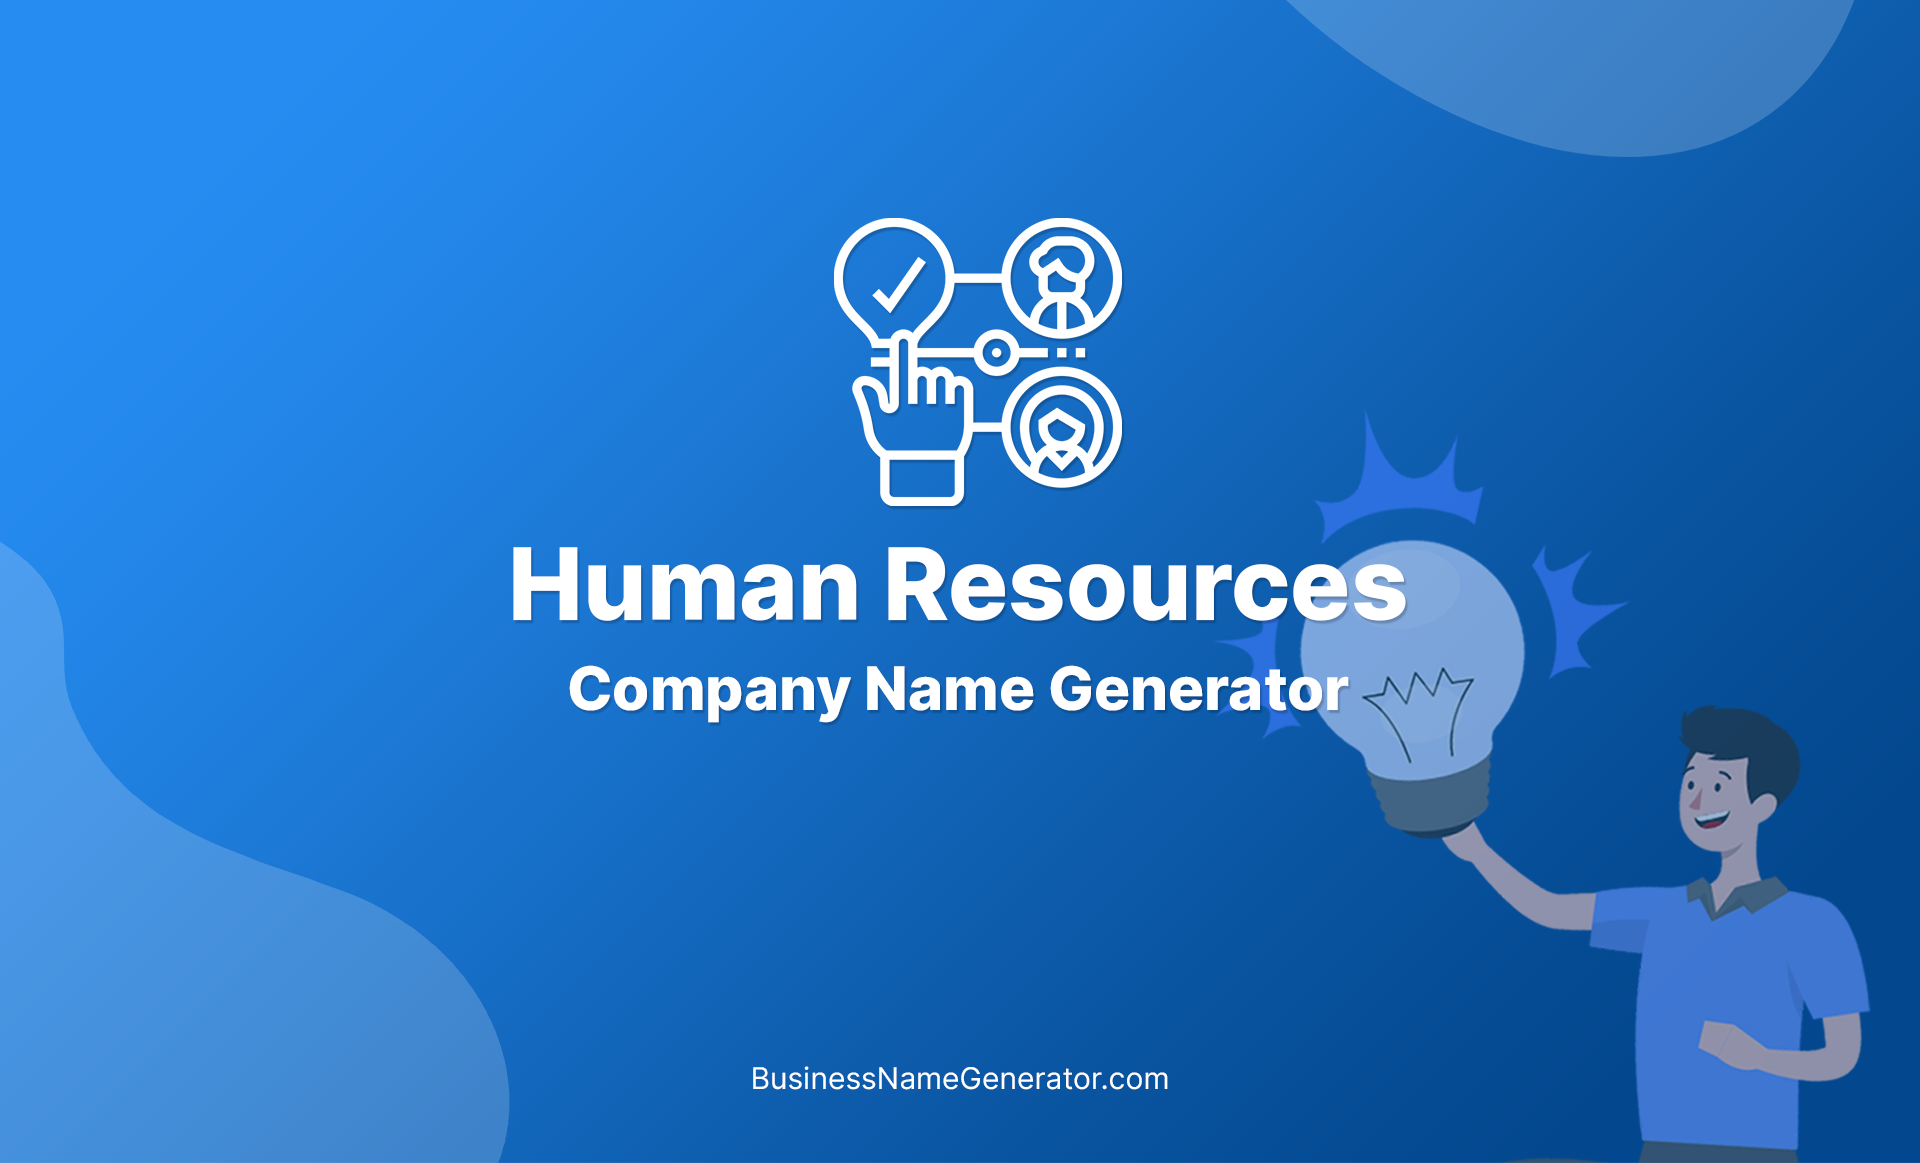 Human Resources Company Name Generator